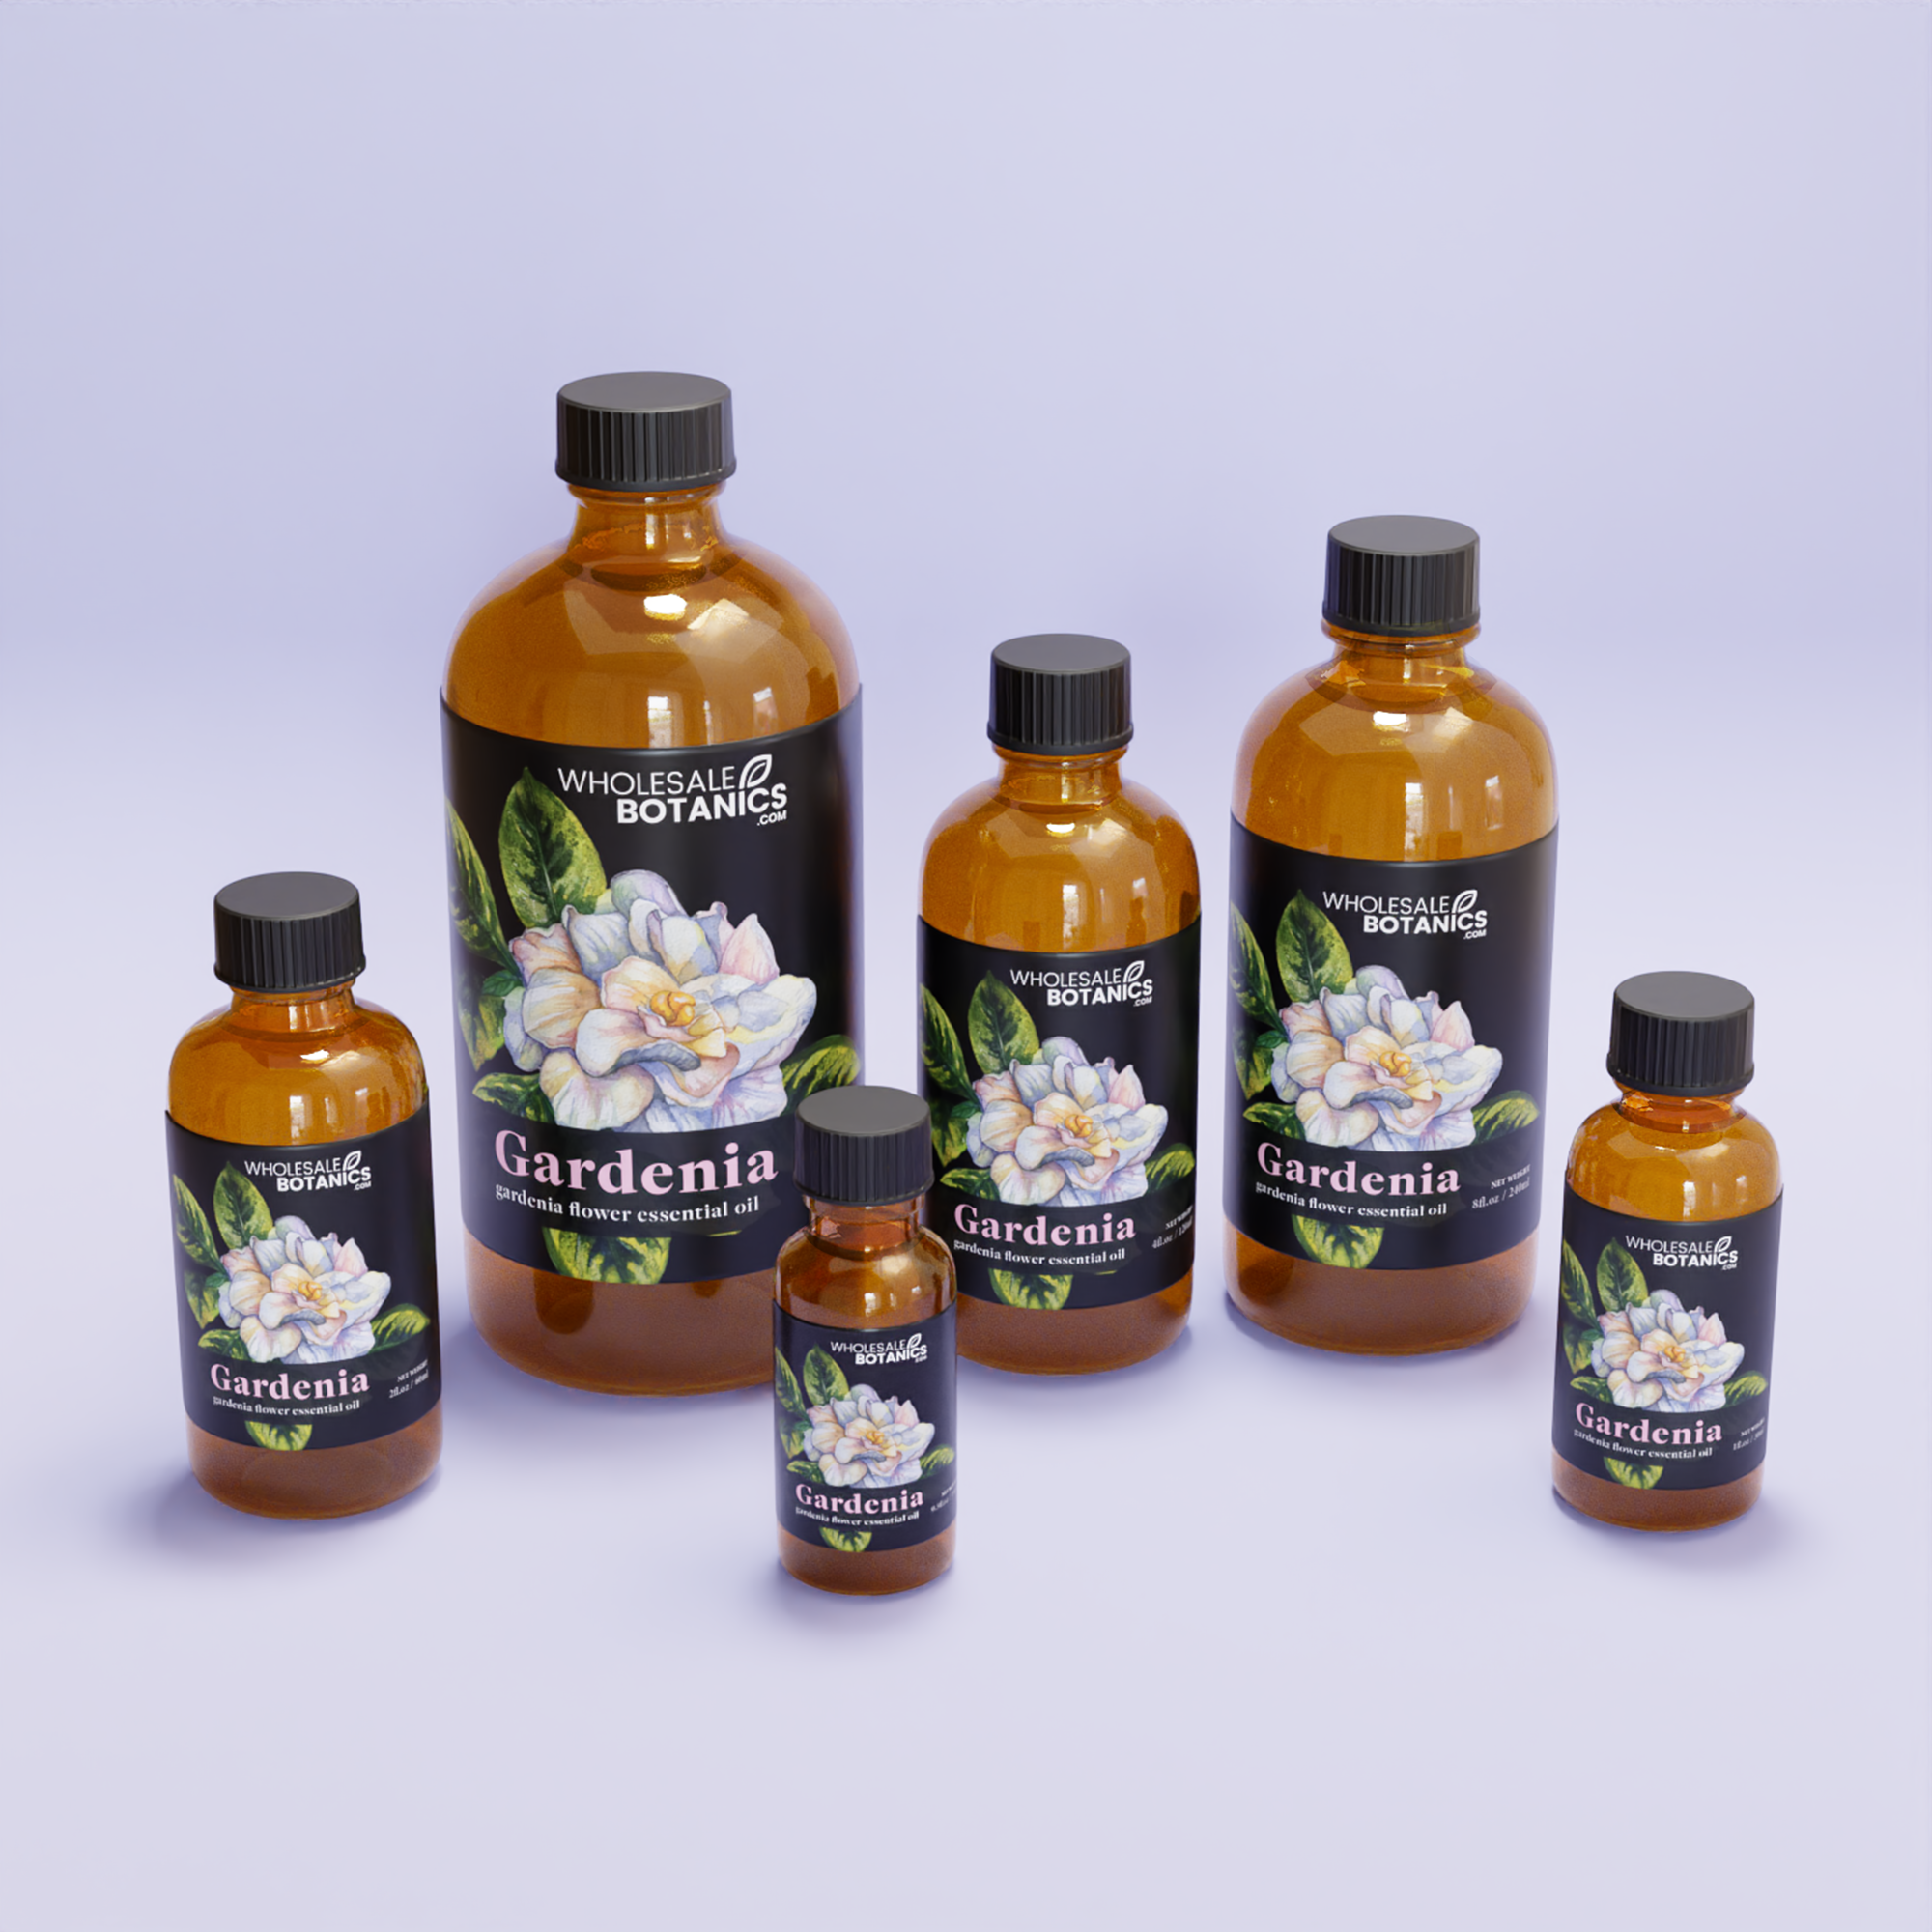 Gardenia Oil — Wholesale Botanics